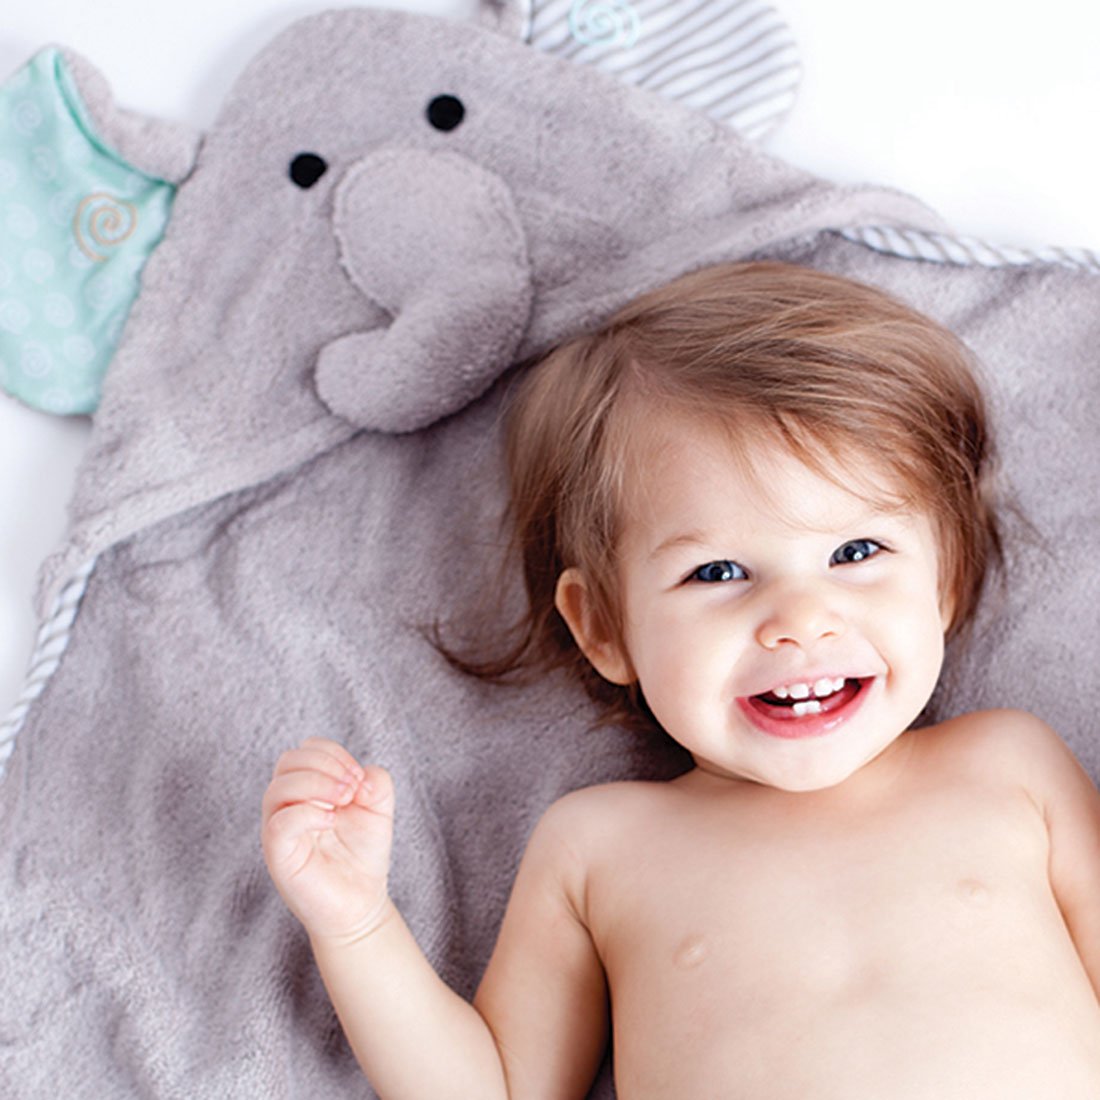 Baby Plush Terry Hooded Bath Towel - Elle the Elephant